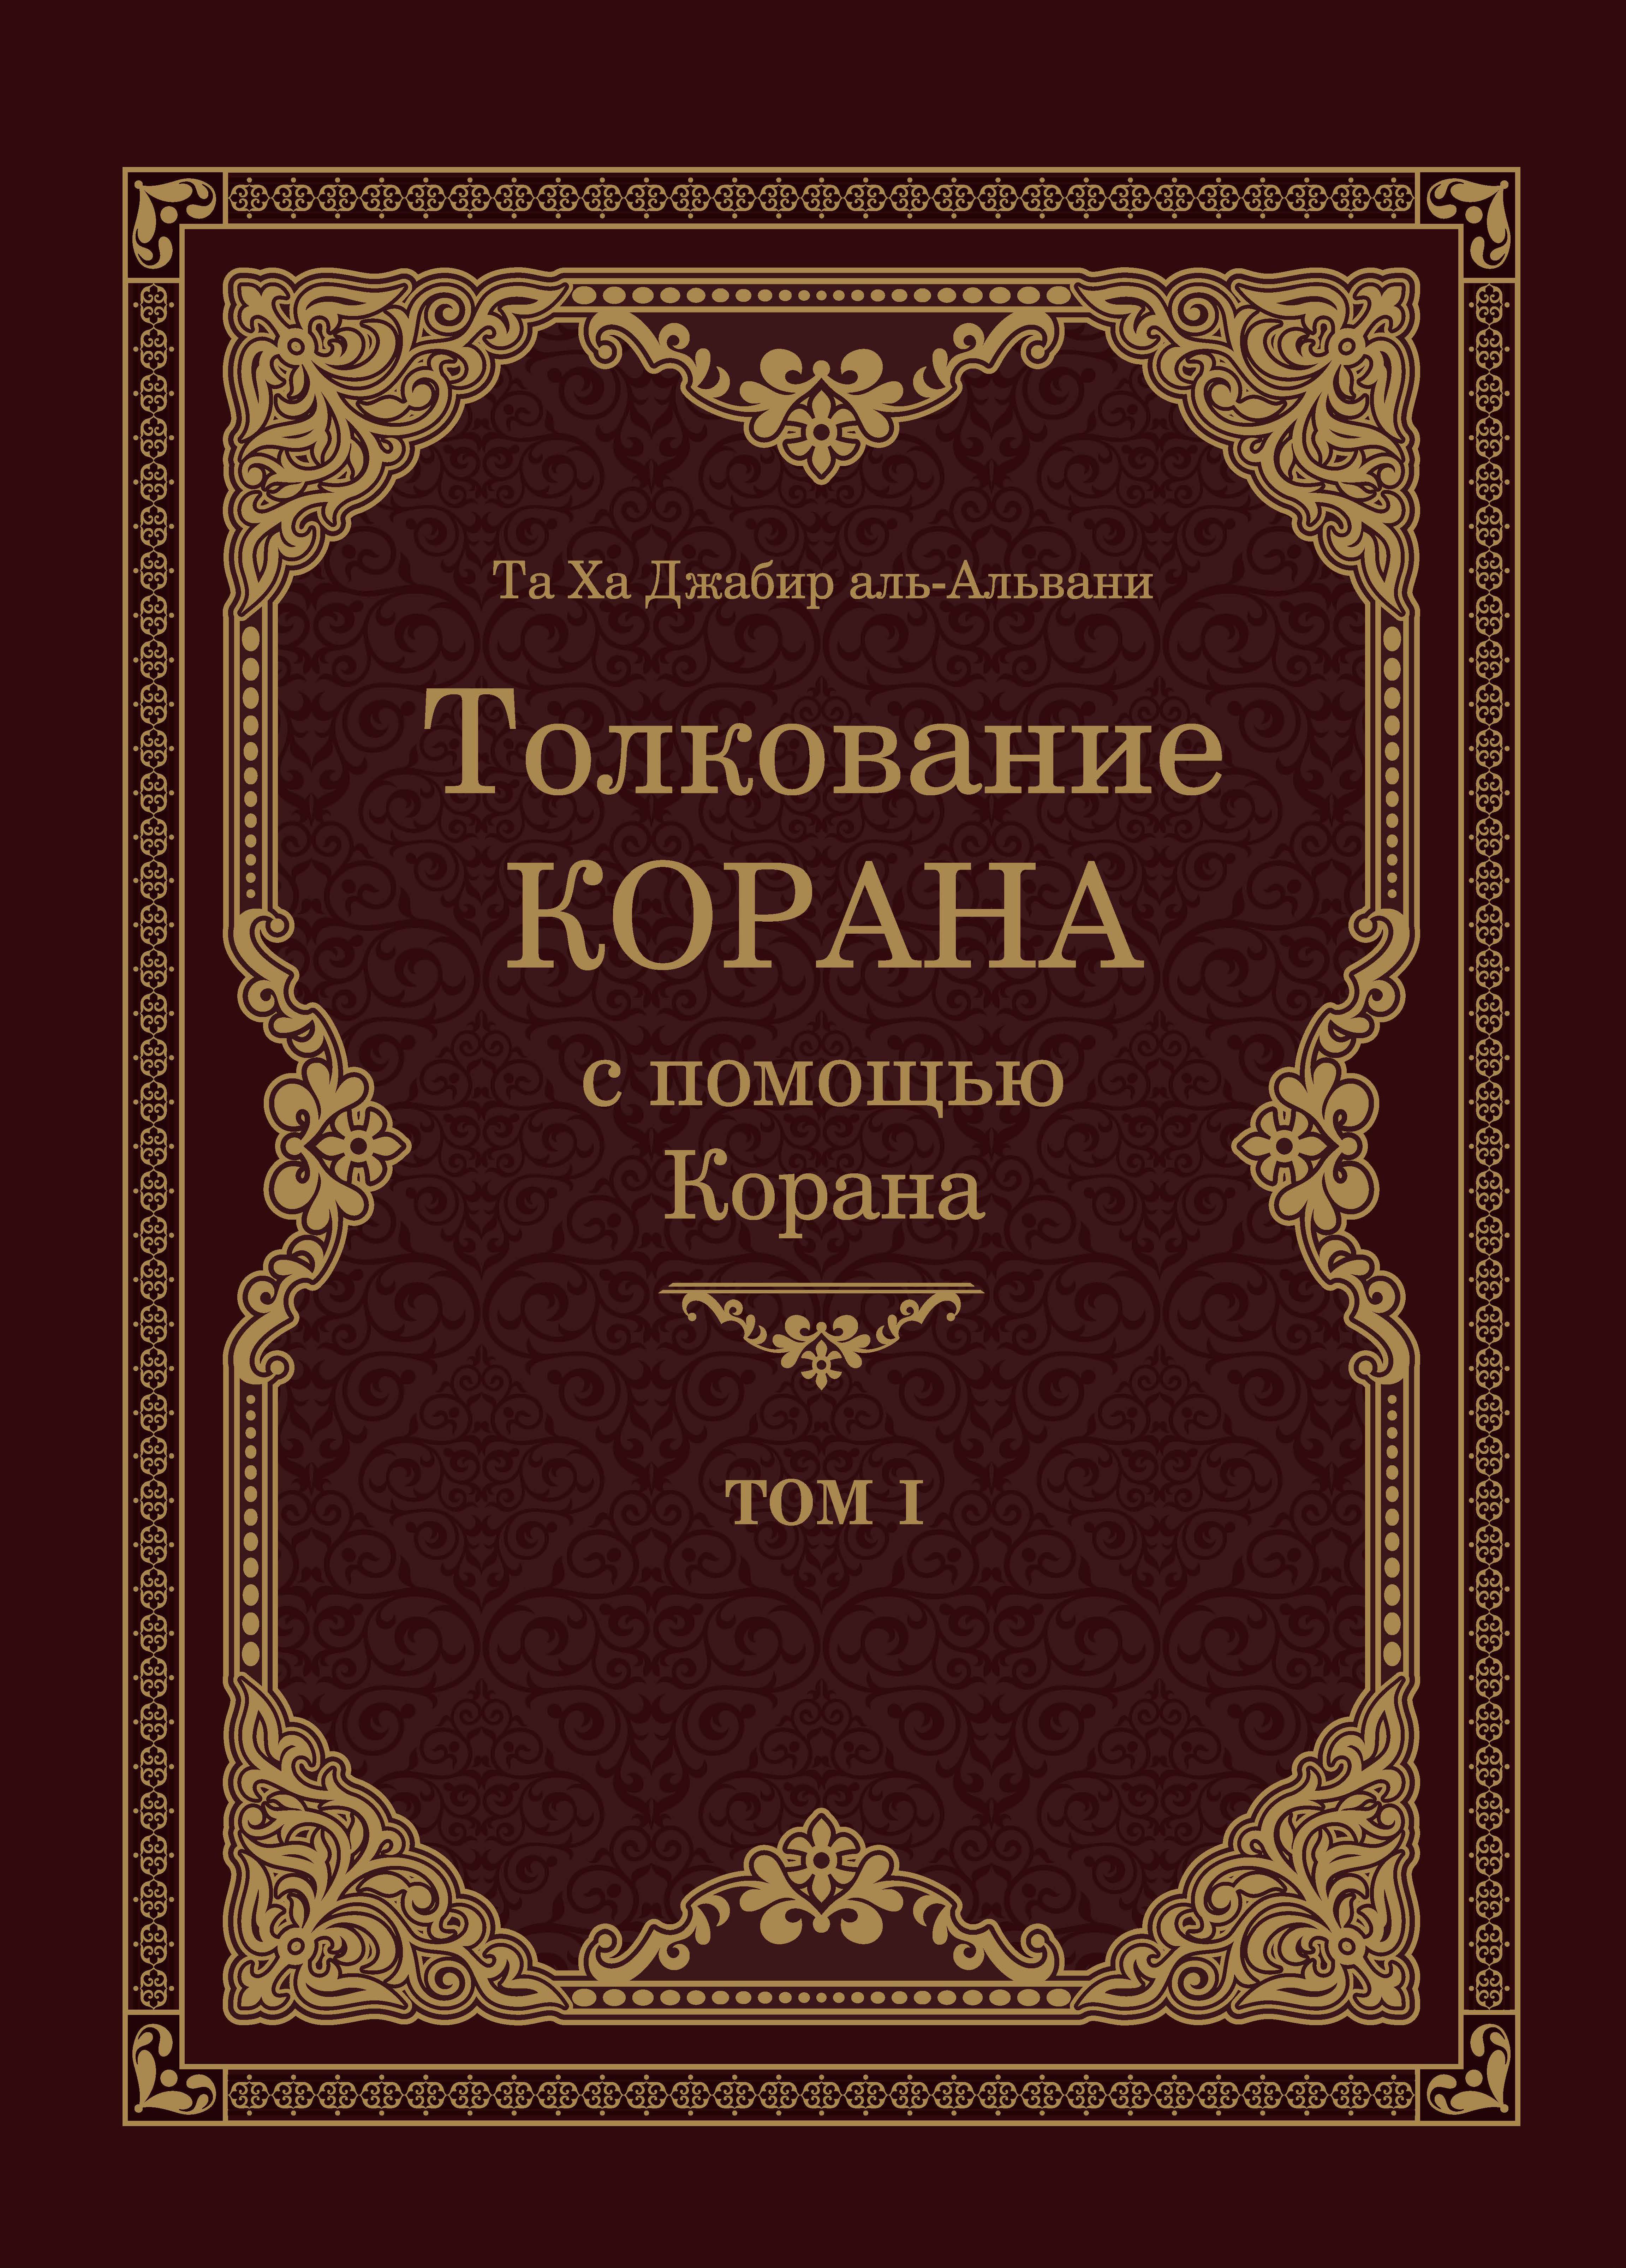 Russsian: Толкование Корана С Помощью Корана I (Tafsīr al-Qurān bil-Qur`ān – 1)